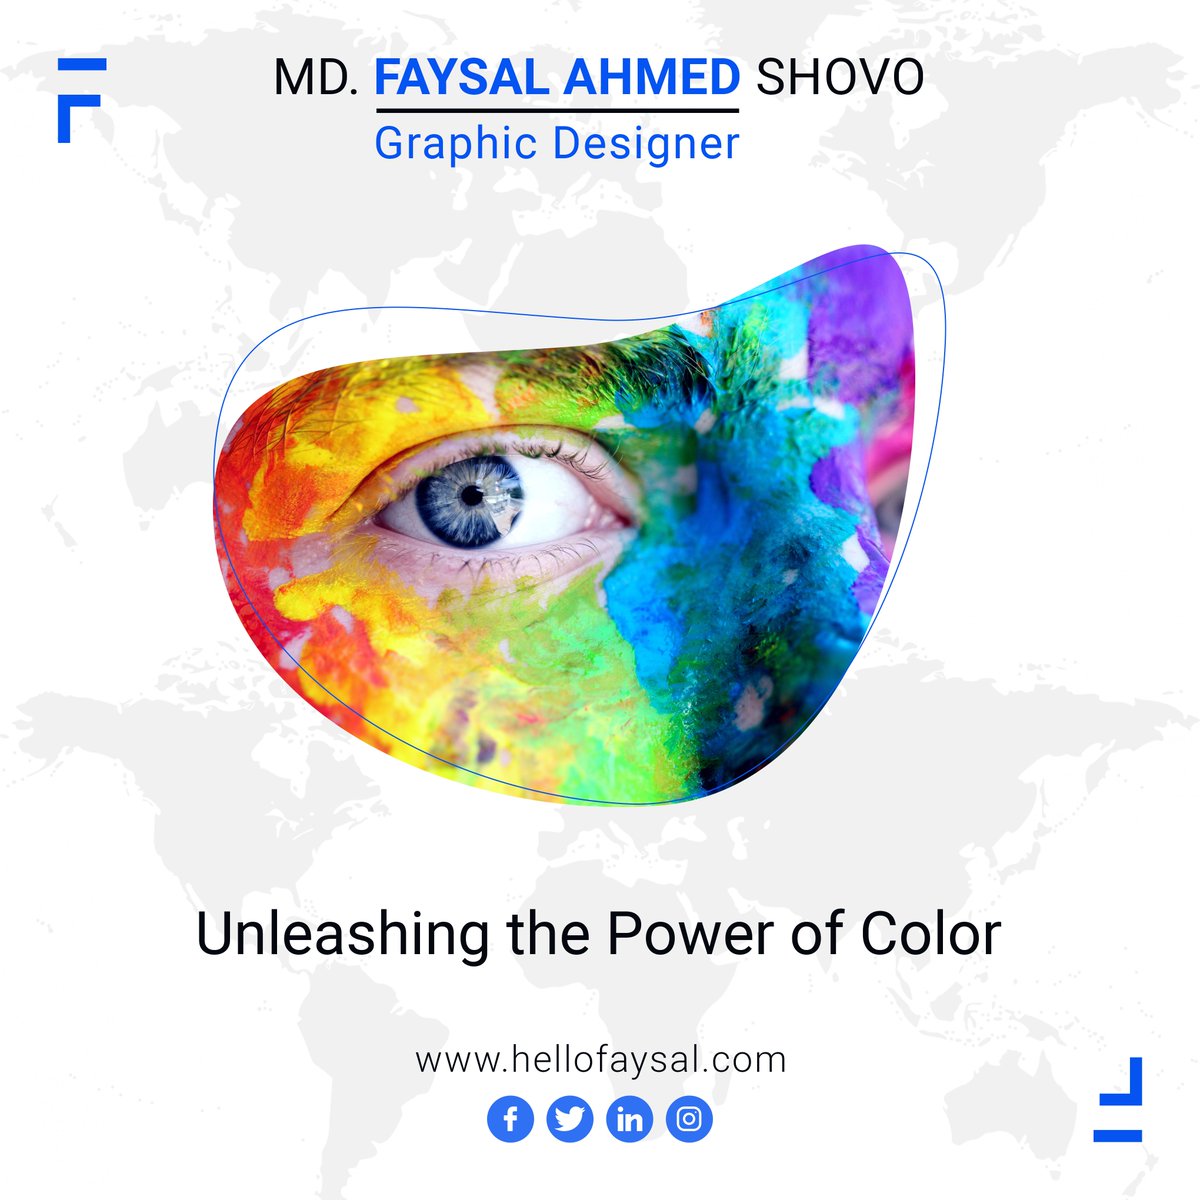 𝐔𝐧𝐥𝐞𝐚𝐬𝐡𝐢𝐧𝐠 𝐭𝐡𝐞 𝐏𝐨𝐰𝐞𝐫 𝐨𝐟 𝐂𝐨𝐥𝐨𝐫: 𝐀 𝐆𝐮𝐢𝐝𝐞 𝐭𝐨 𝐆𝐫𝐚𝐩𝐡𝐢𝐜 𝐃𝐞𝐬𝐢𝐠𝐧'𝐬 𝐌𝐨𝐬𝐭 𝐈𝐧𝐟𝐥𝐮𝐞𝐧𝐭𝐢𝐚𝐥 𝐄𝐥𝐞𝐦𝐞𝐧𝐭
DETAILS: linkedin.com/posts/iamshovo…

.
.
.
#hellofaysal #ColorInspiration #GraphicDesign #DesignTips #ColorTheory #CreativeColors